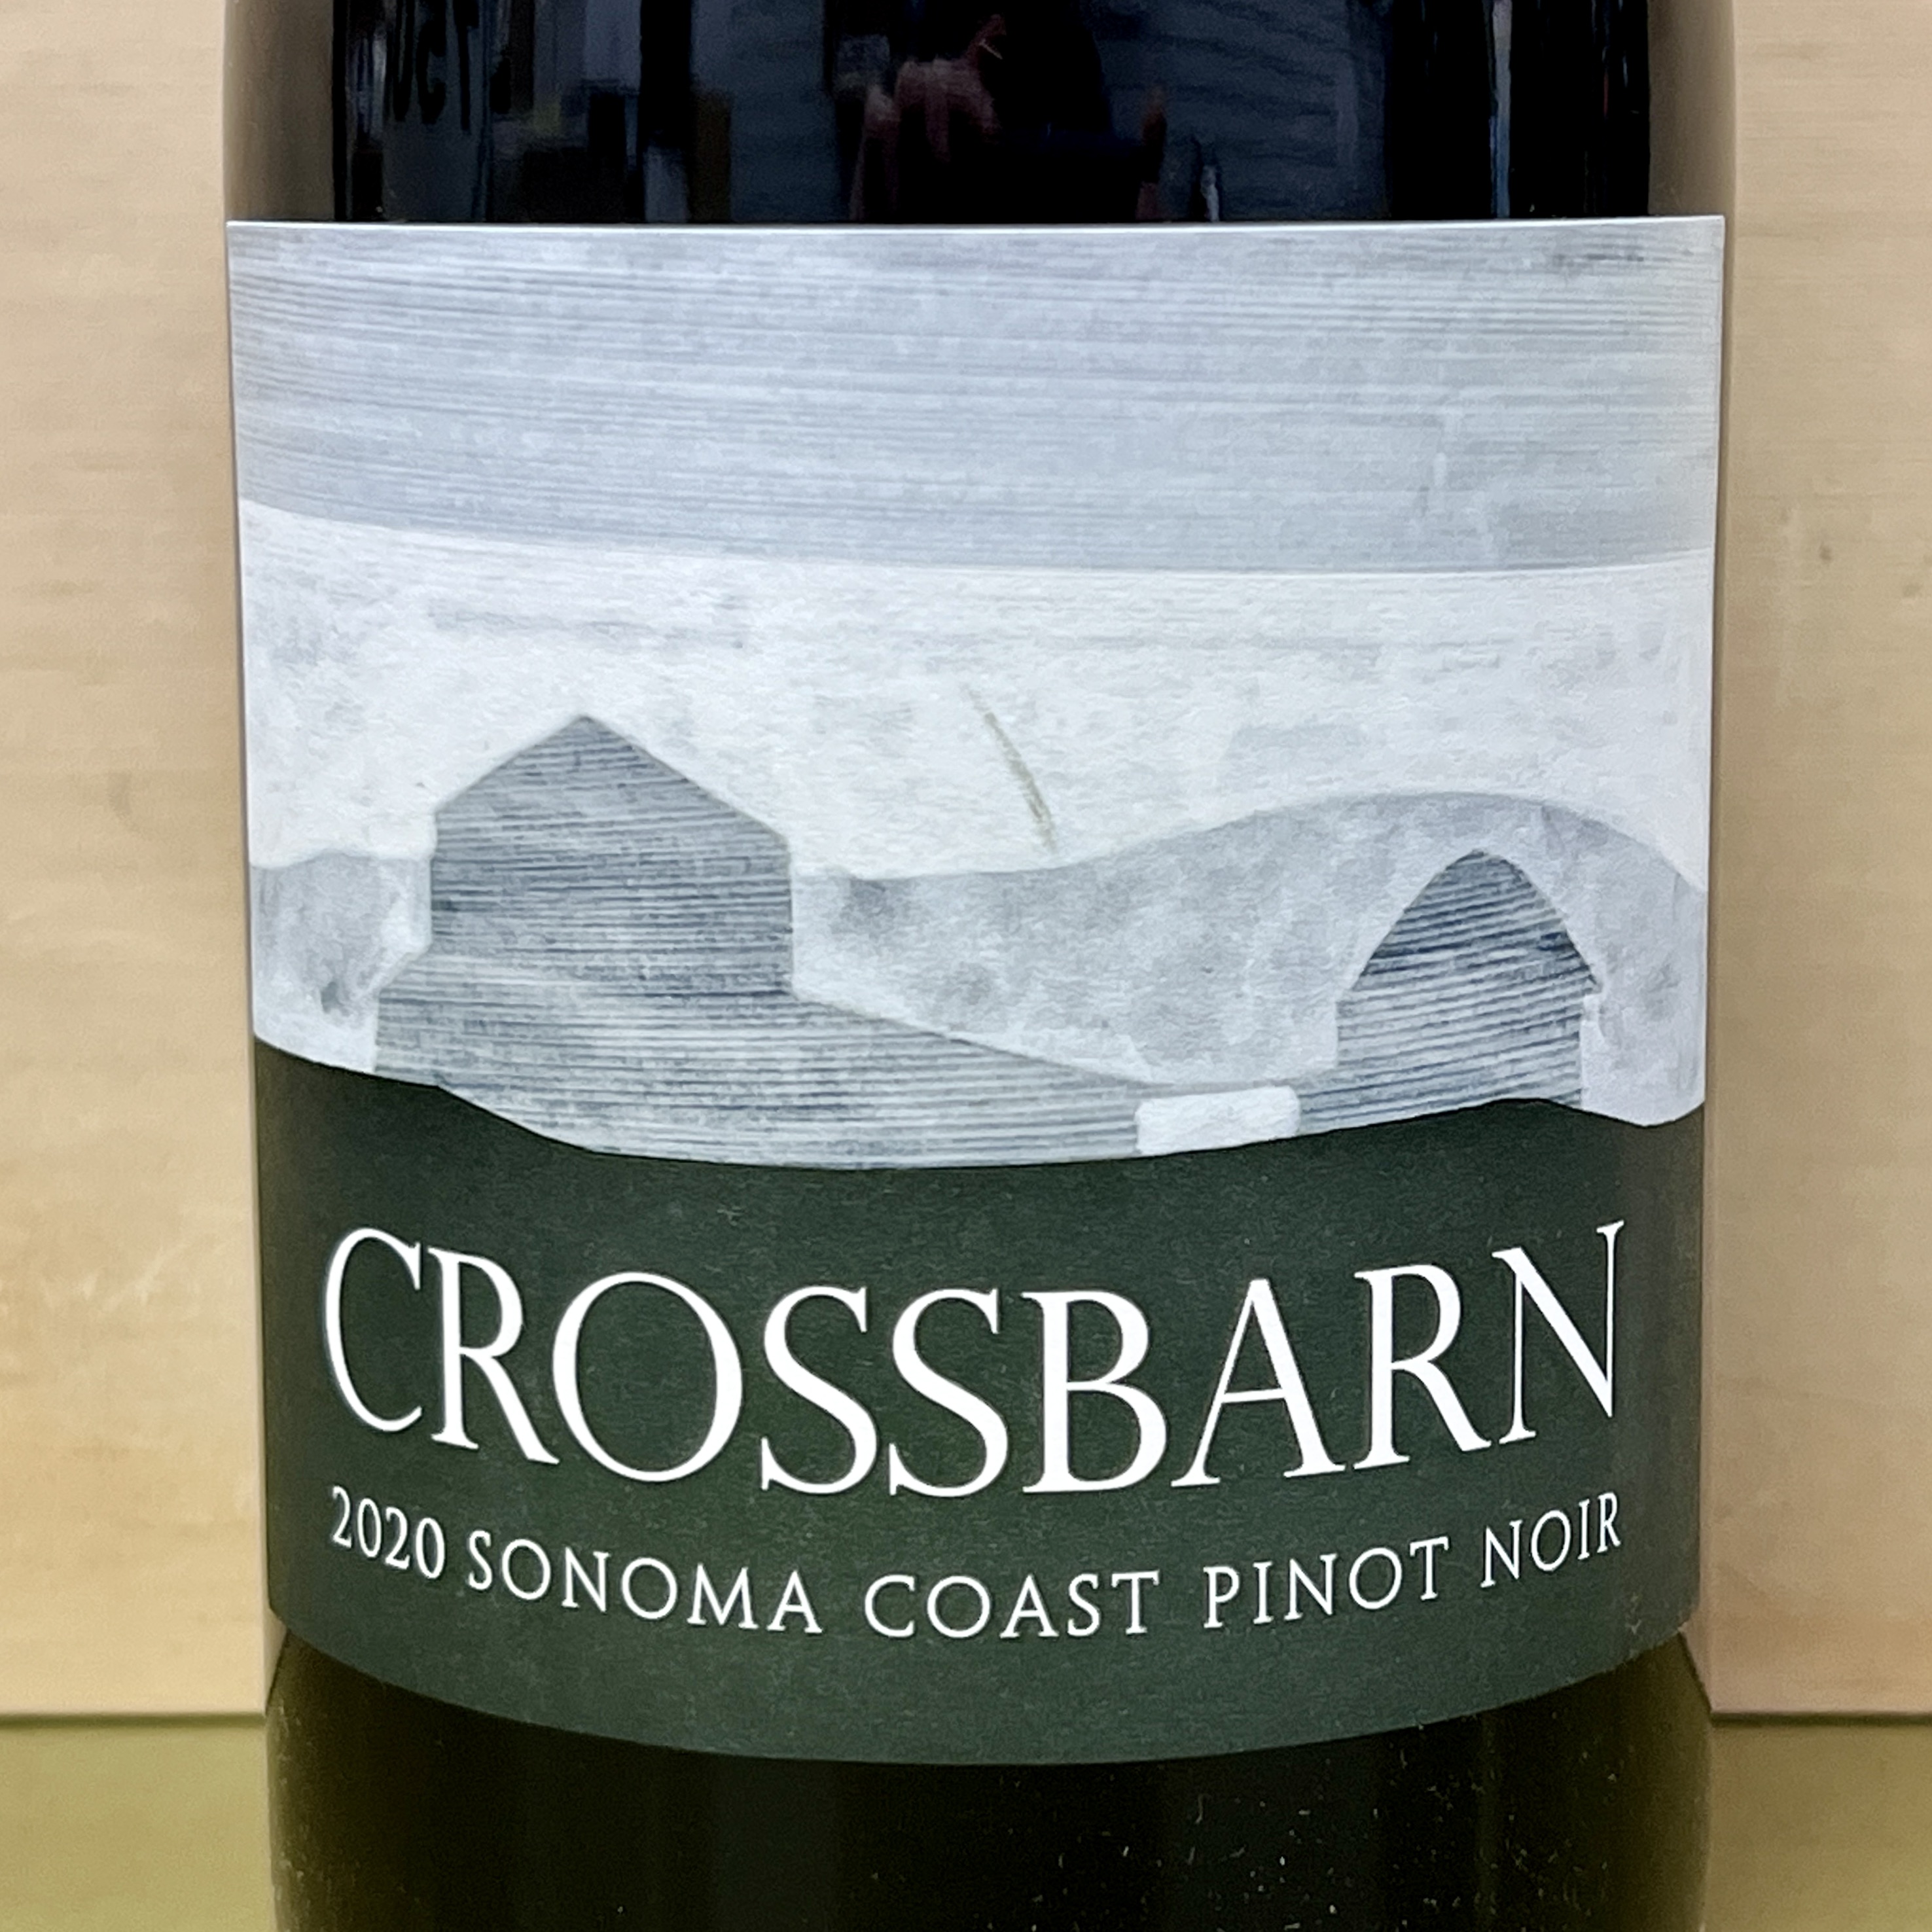 Crossbarn Sonoma Coast Pinot Noir 2020